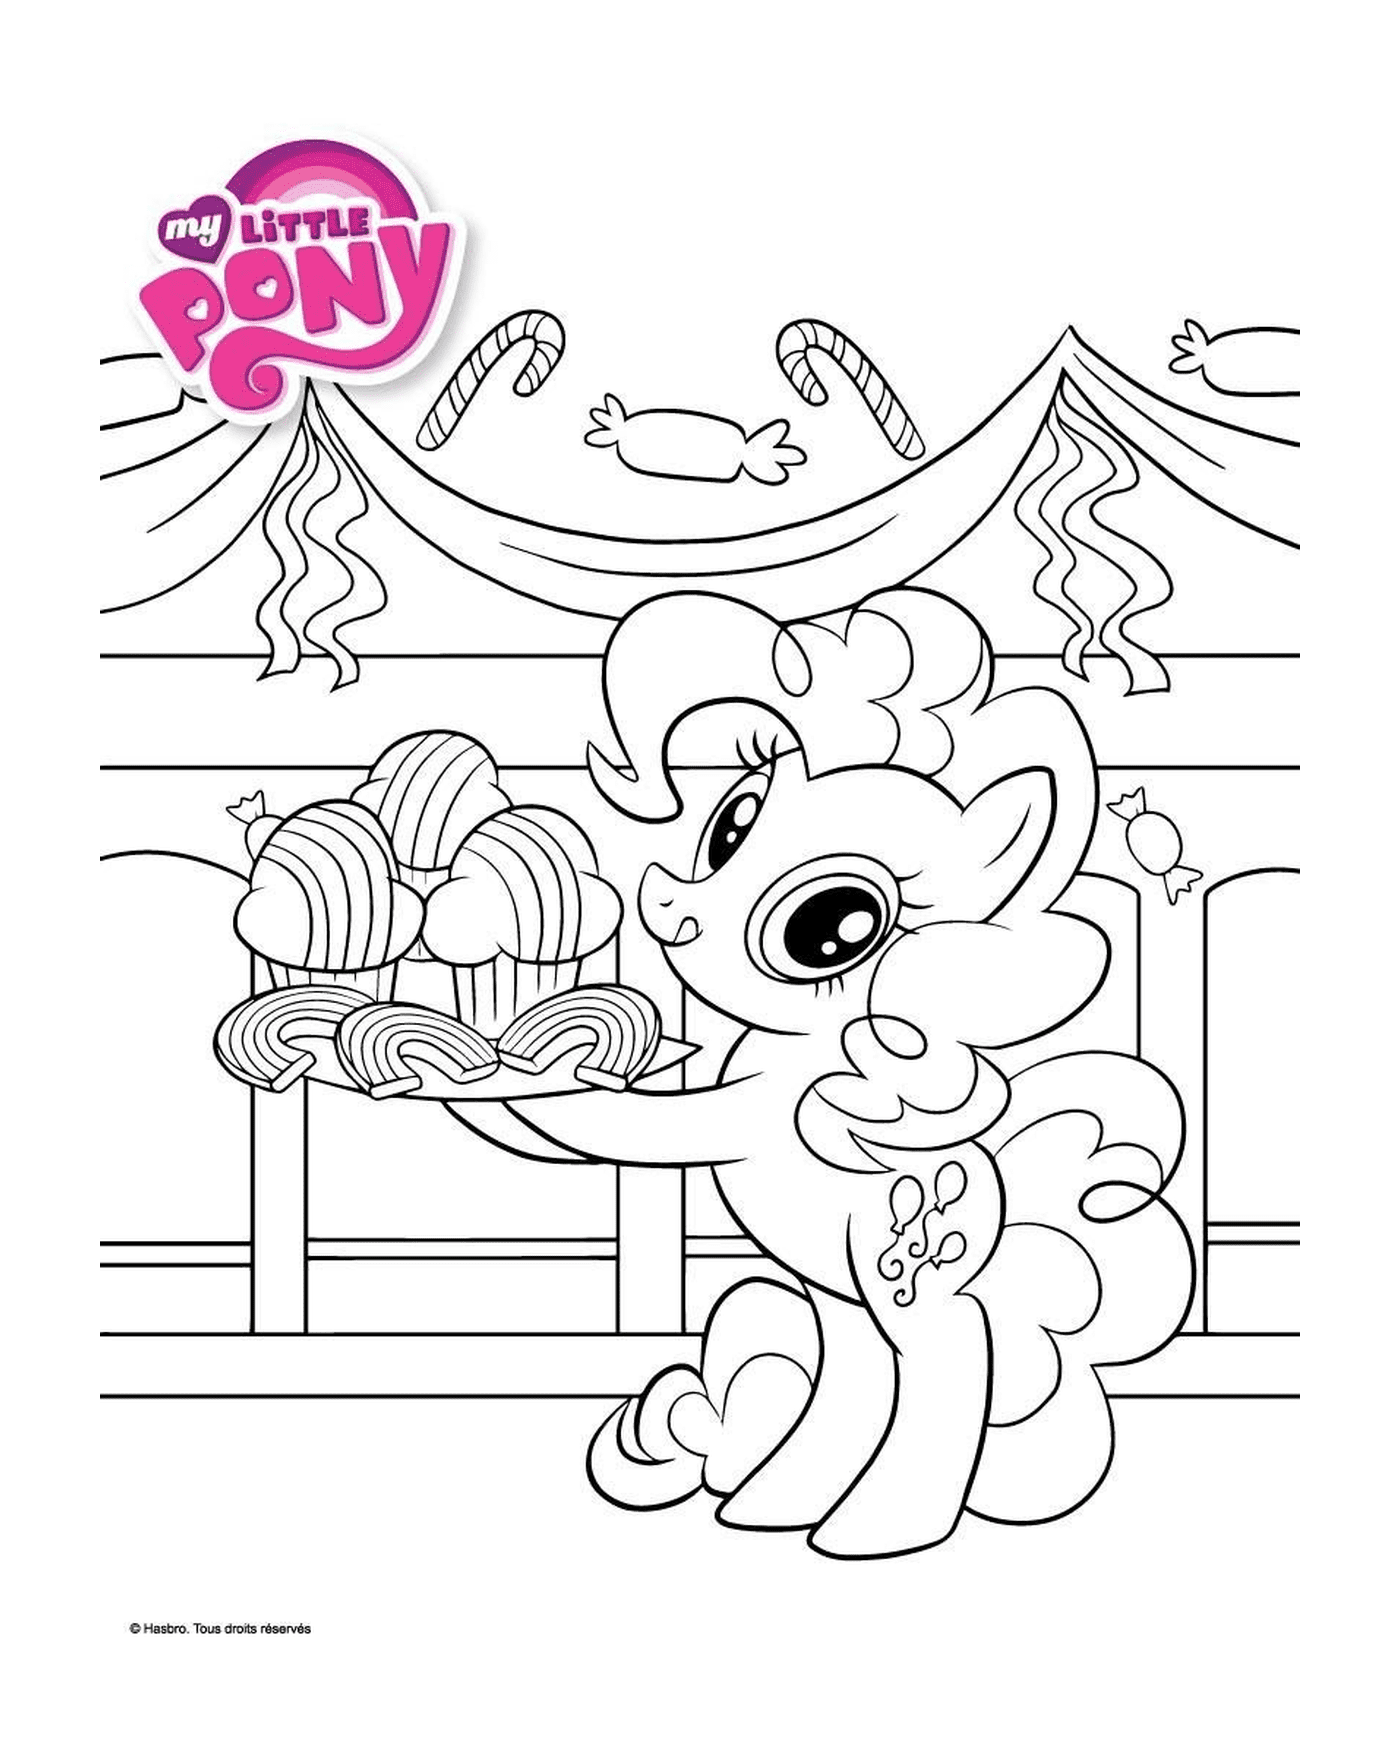  Pony hält ein Cupcake Tablett 